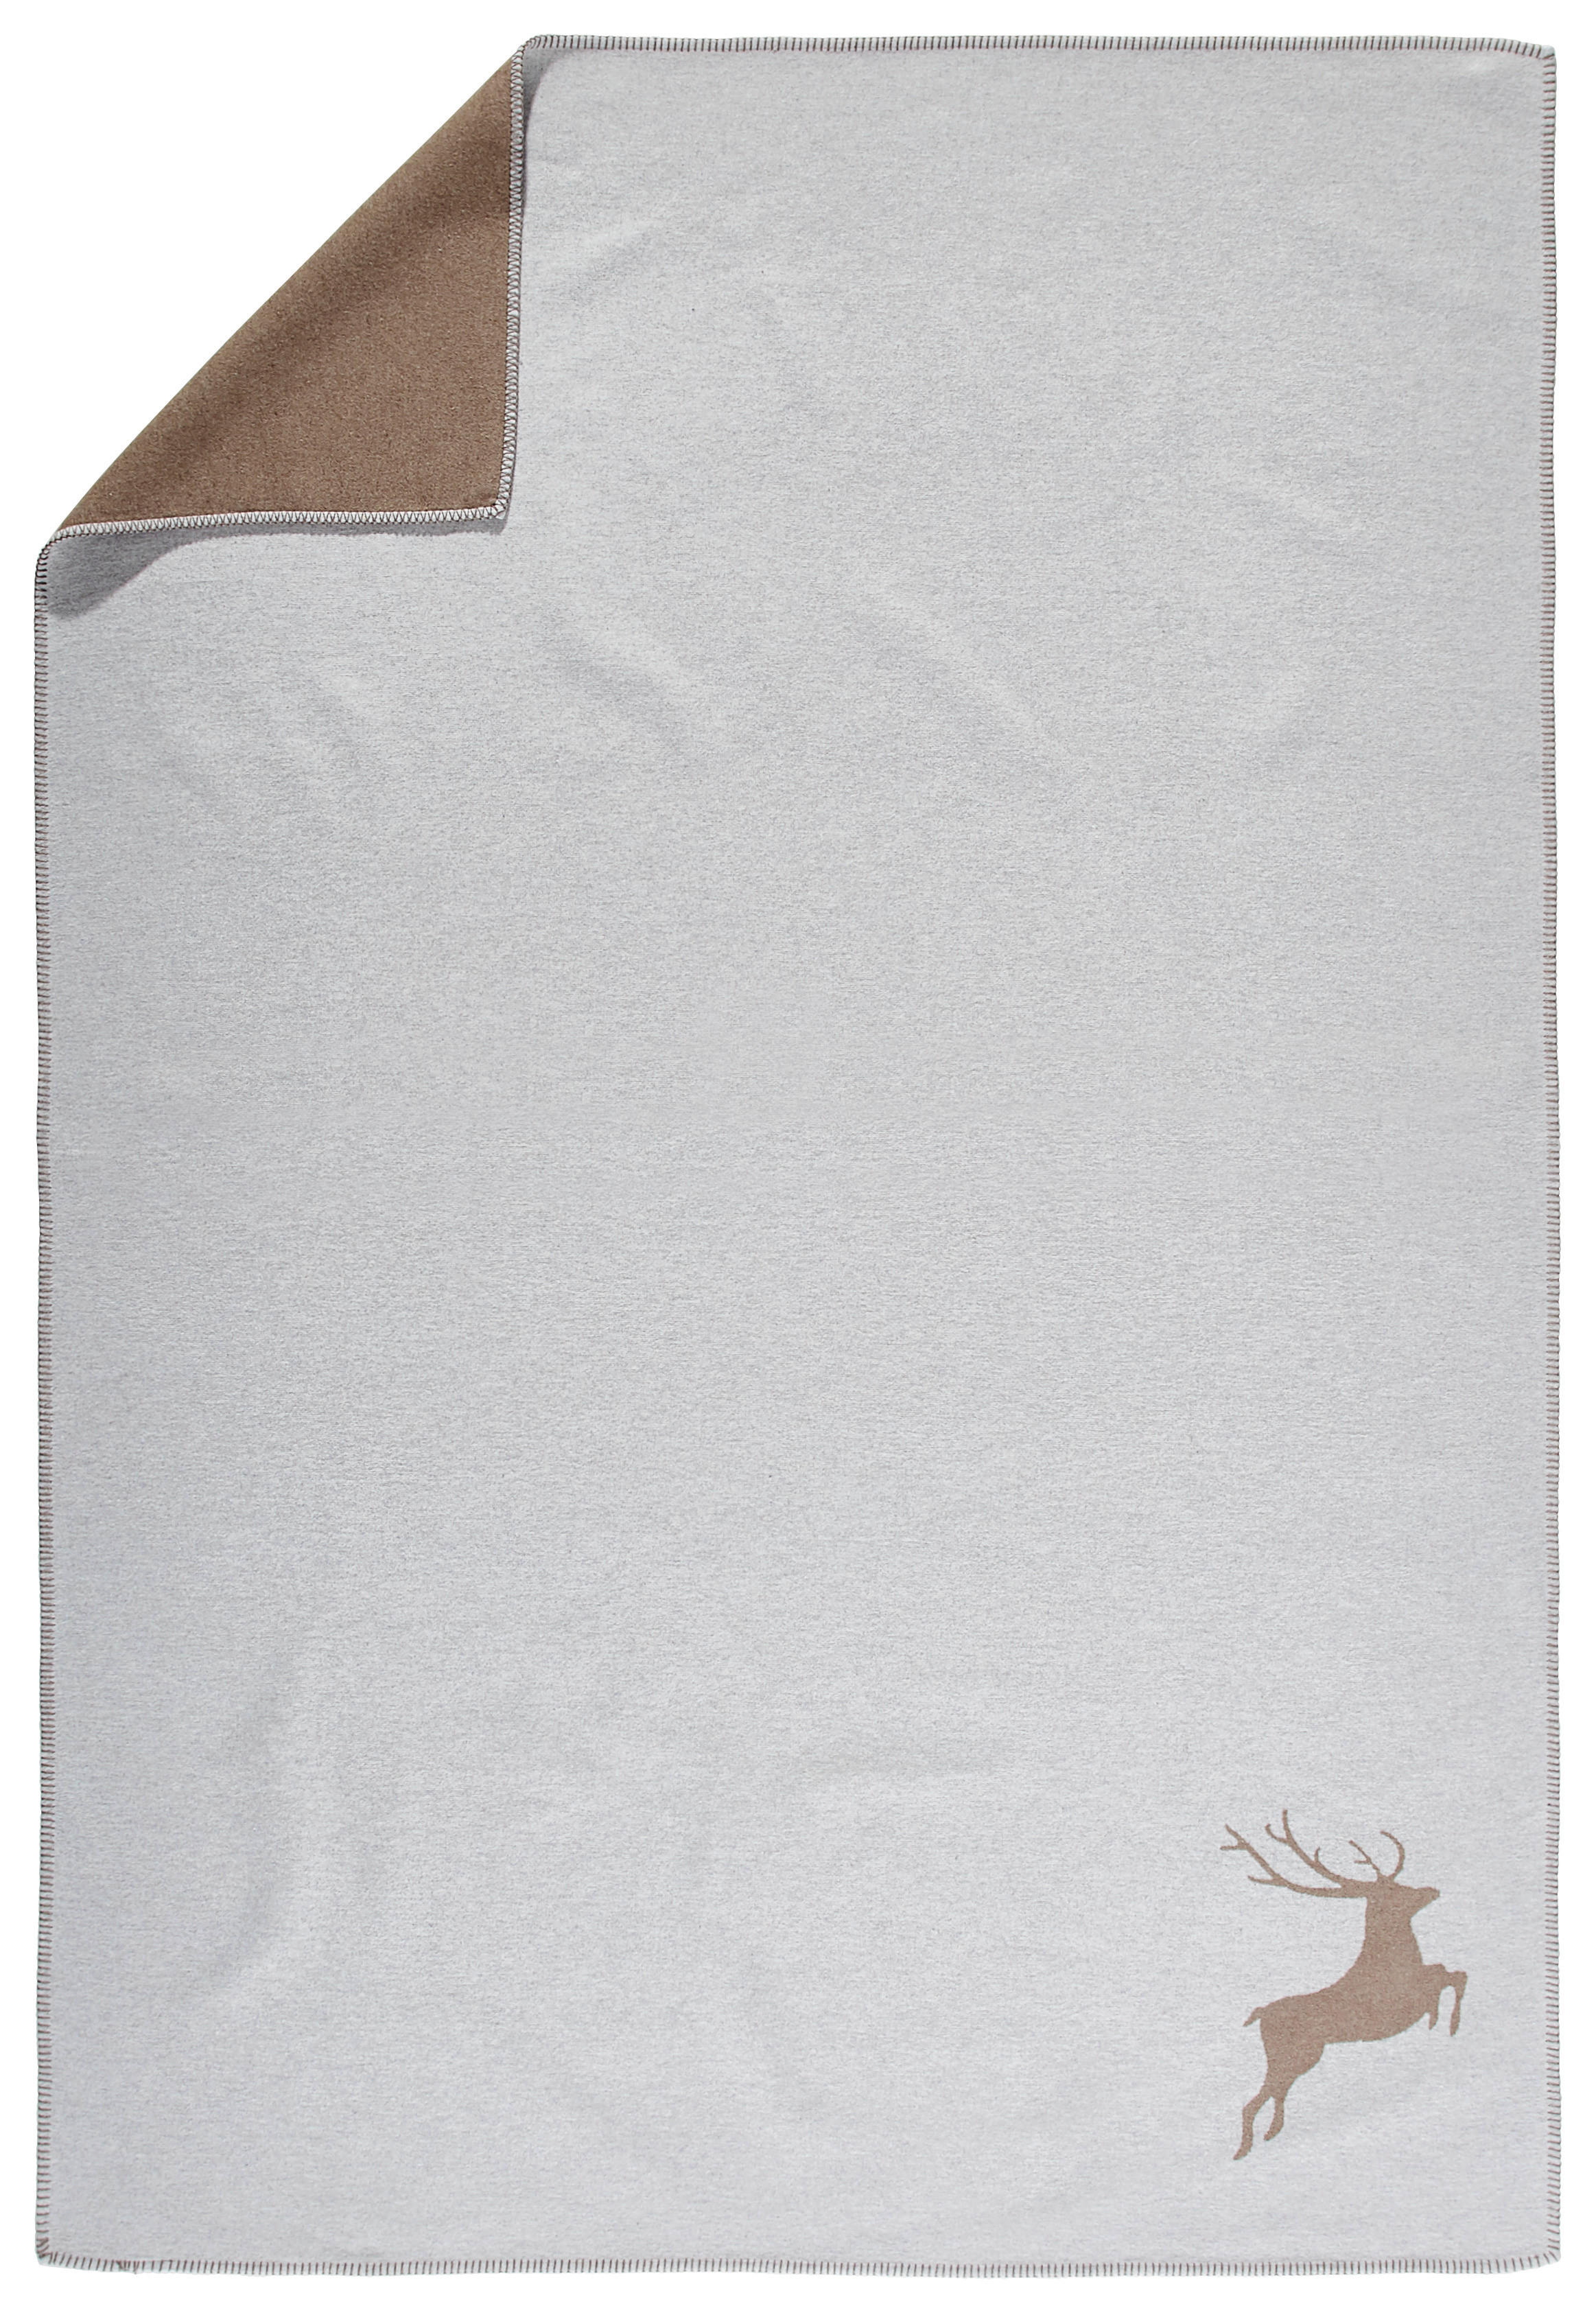 WOHNDECKE 140/200 cm  - Hellgrau, KONVENTIONELL, Textil (140/200cm) - David Fussenegger